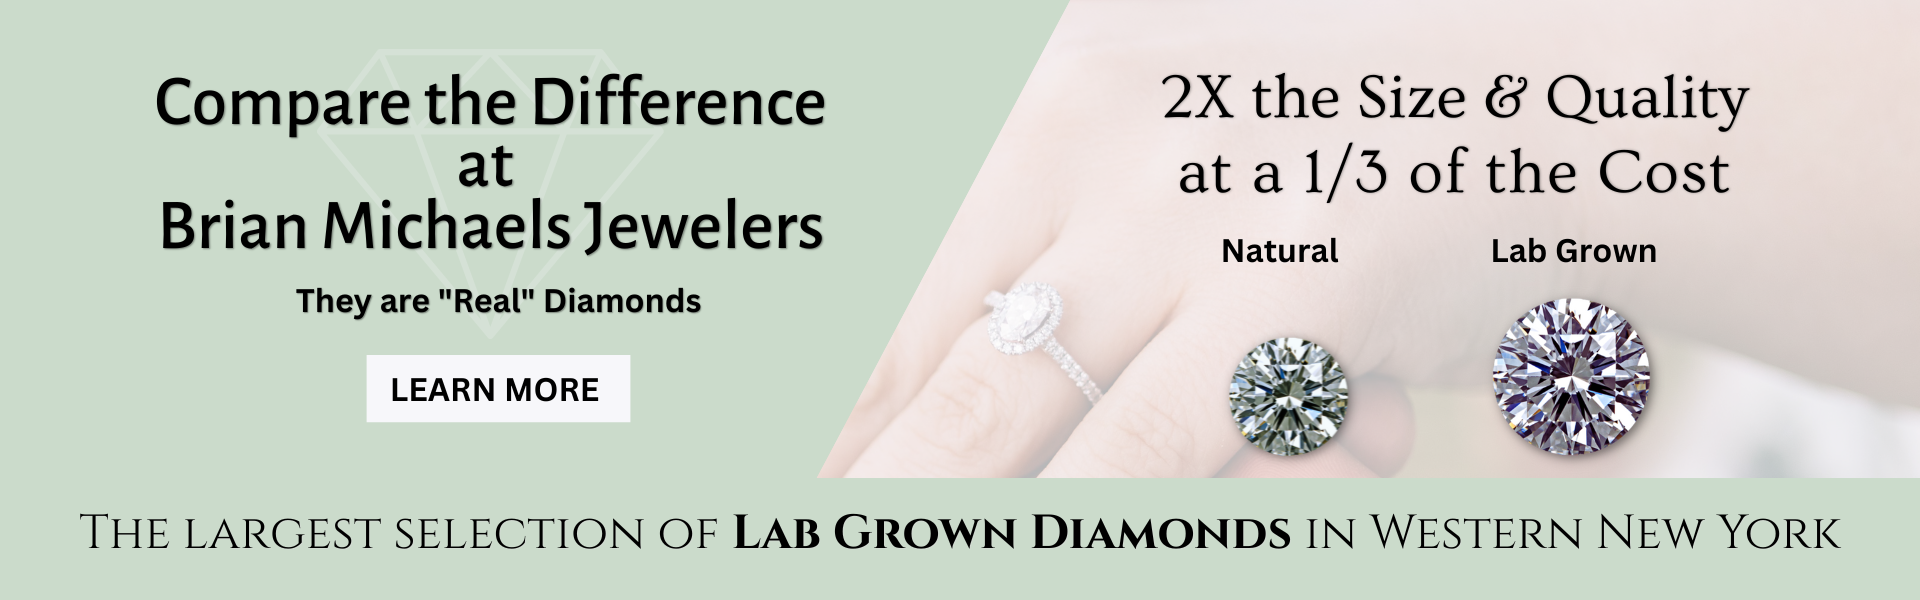 Lab Grown Diamonds at Brian Michaels Jewelers